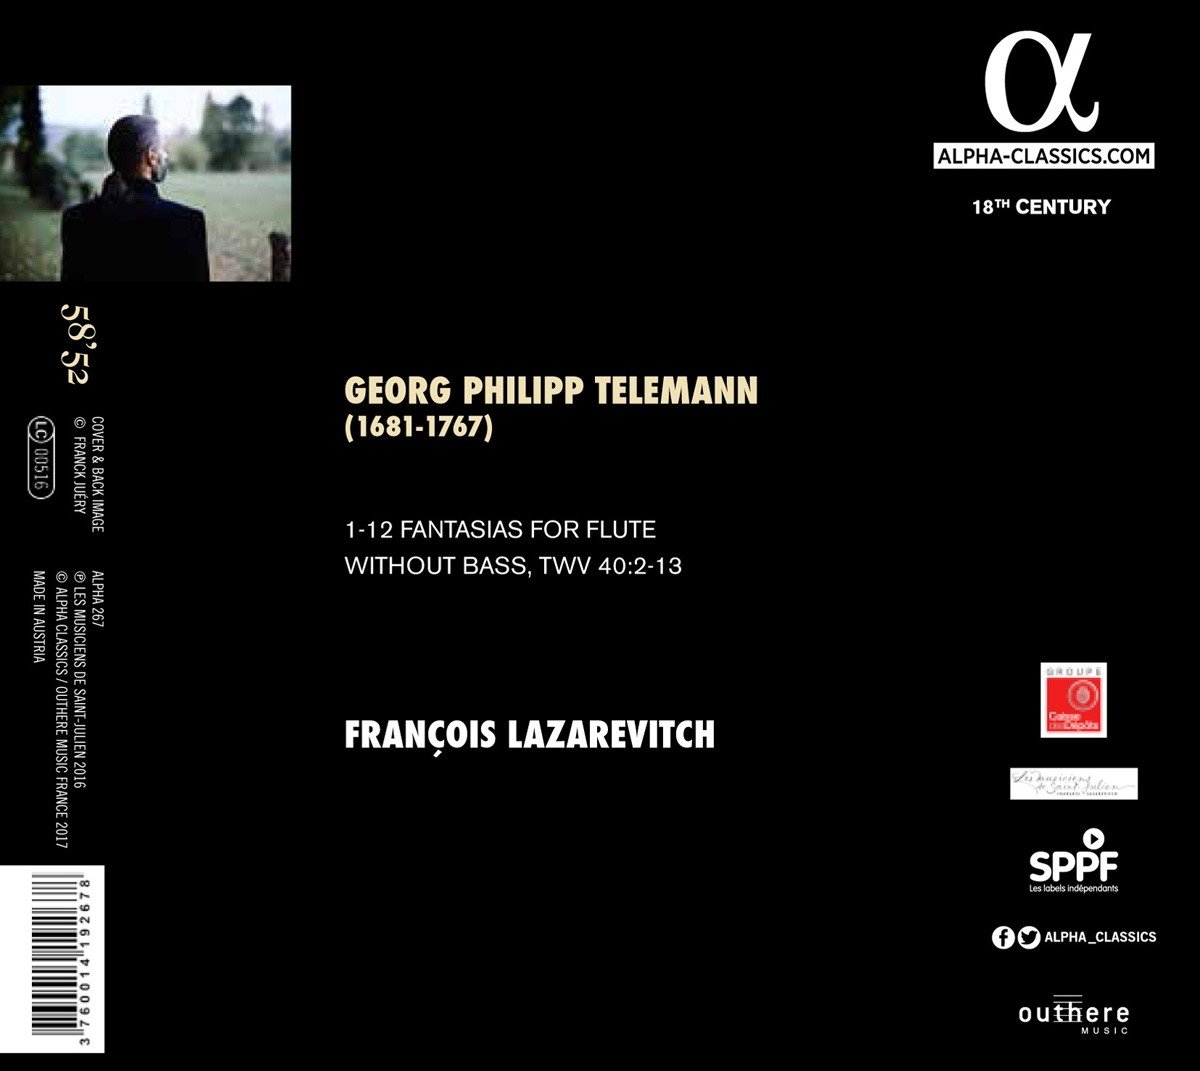 Francois Lazarevitch 텔레만: 12개의 무반주 플루트 환상곡 (Telemann: 12 Fantasias for Solo Flute) 프랑수아 라자레비치